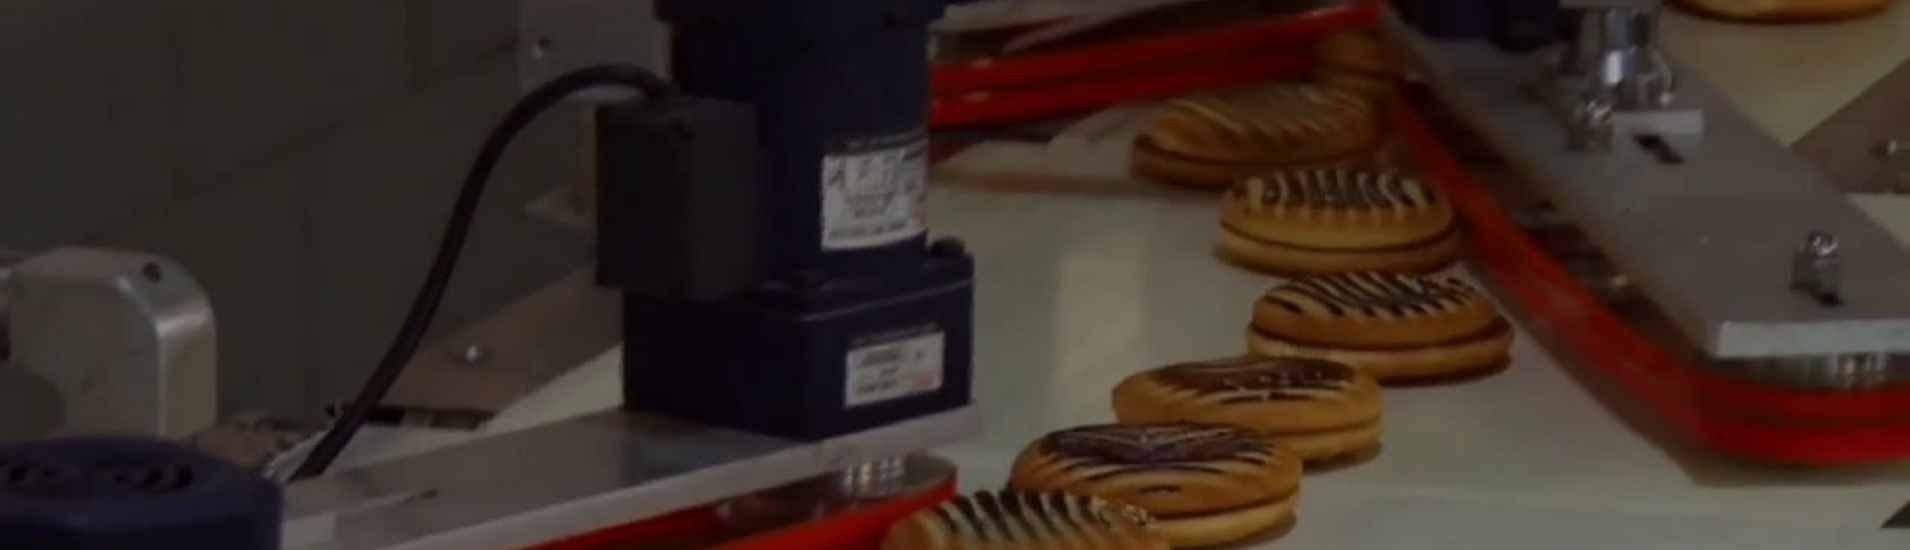 cookie packing machine supplier